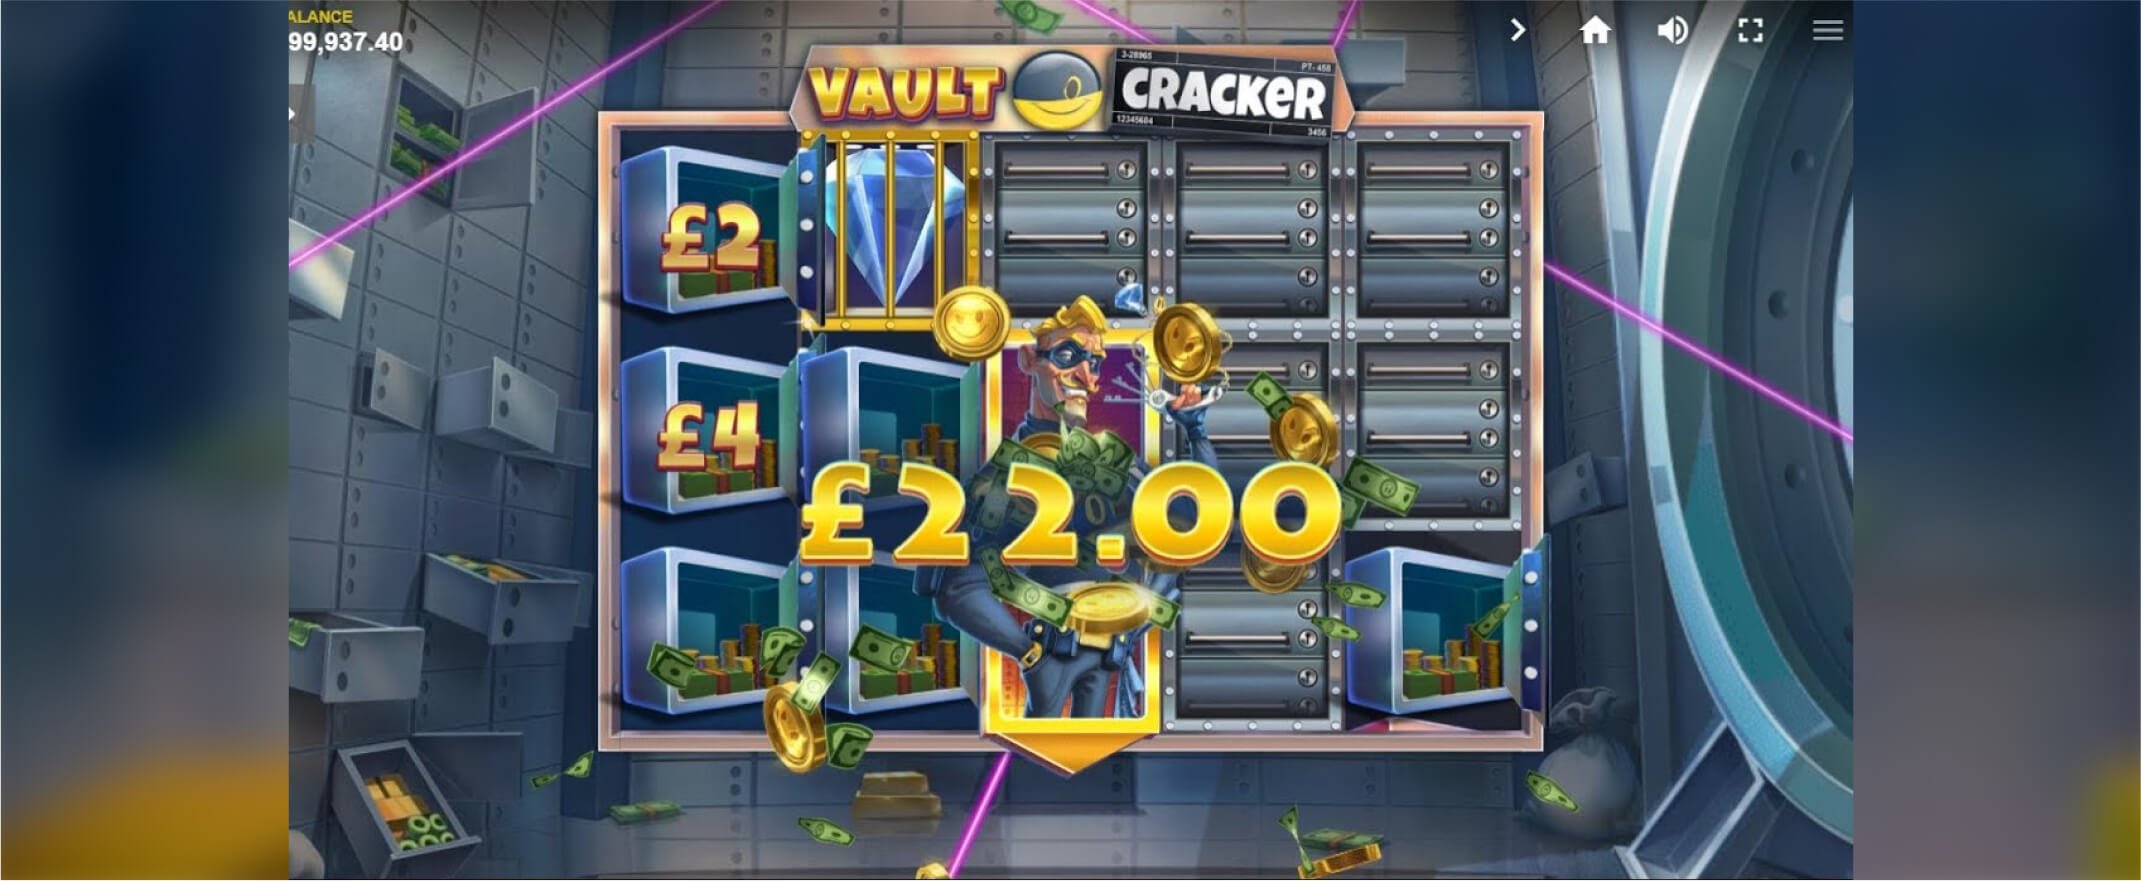 Vault Cracker slot screenshot of the reels